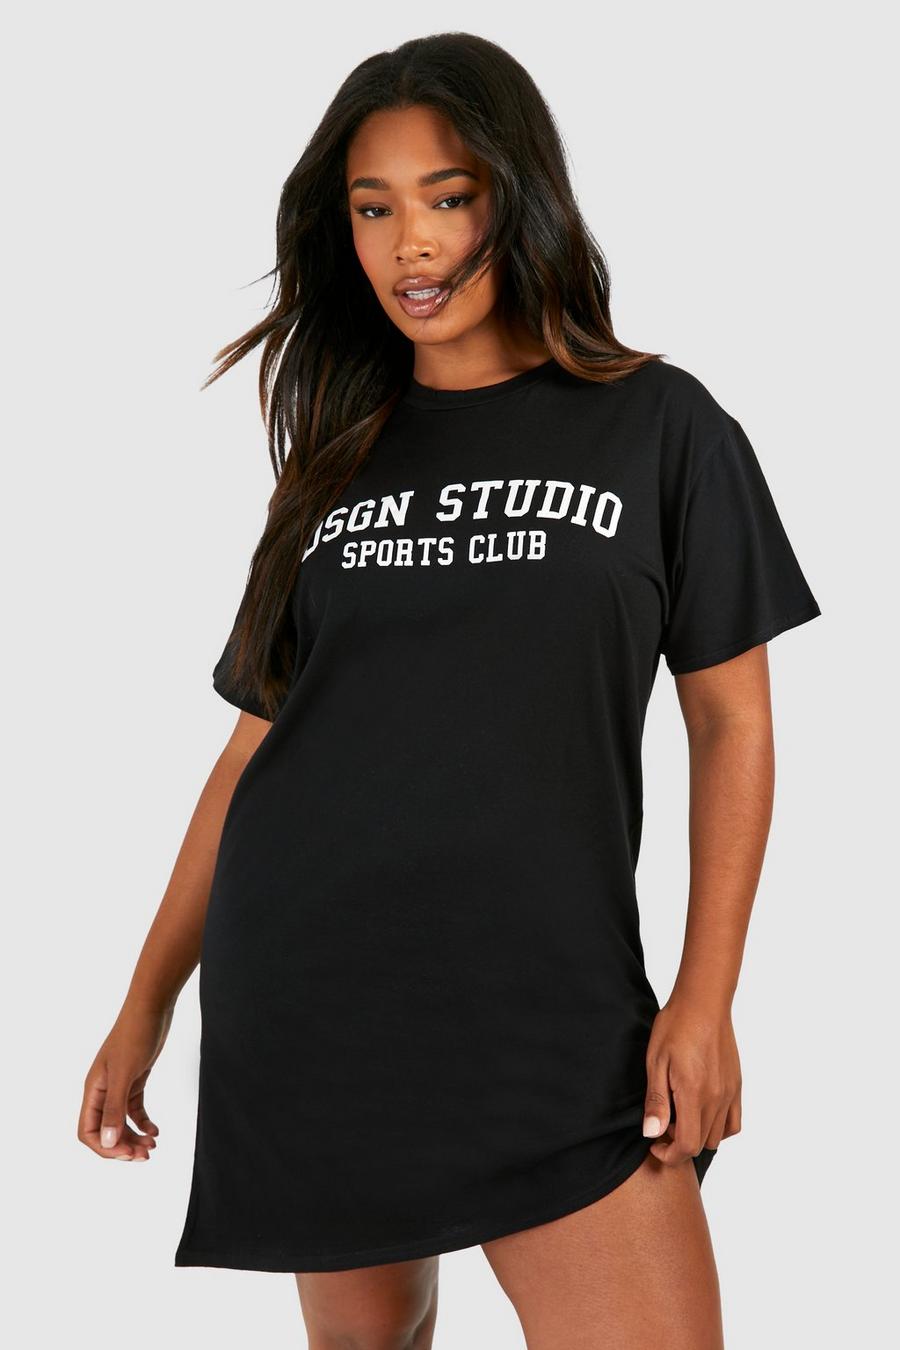 Vestito T-shirt Plus Size Dsgn Studio Sports Club, Black